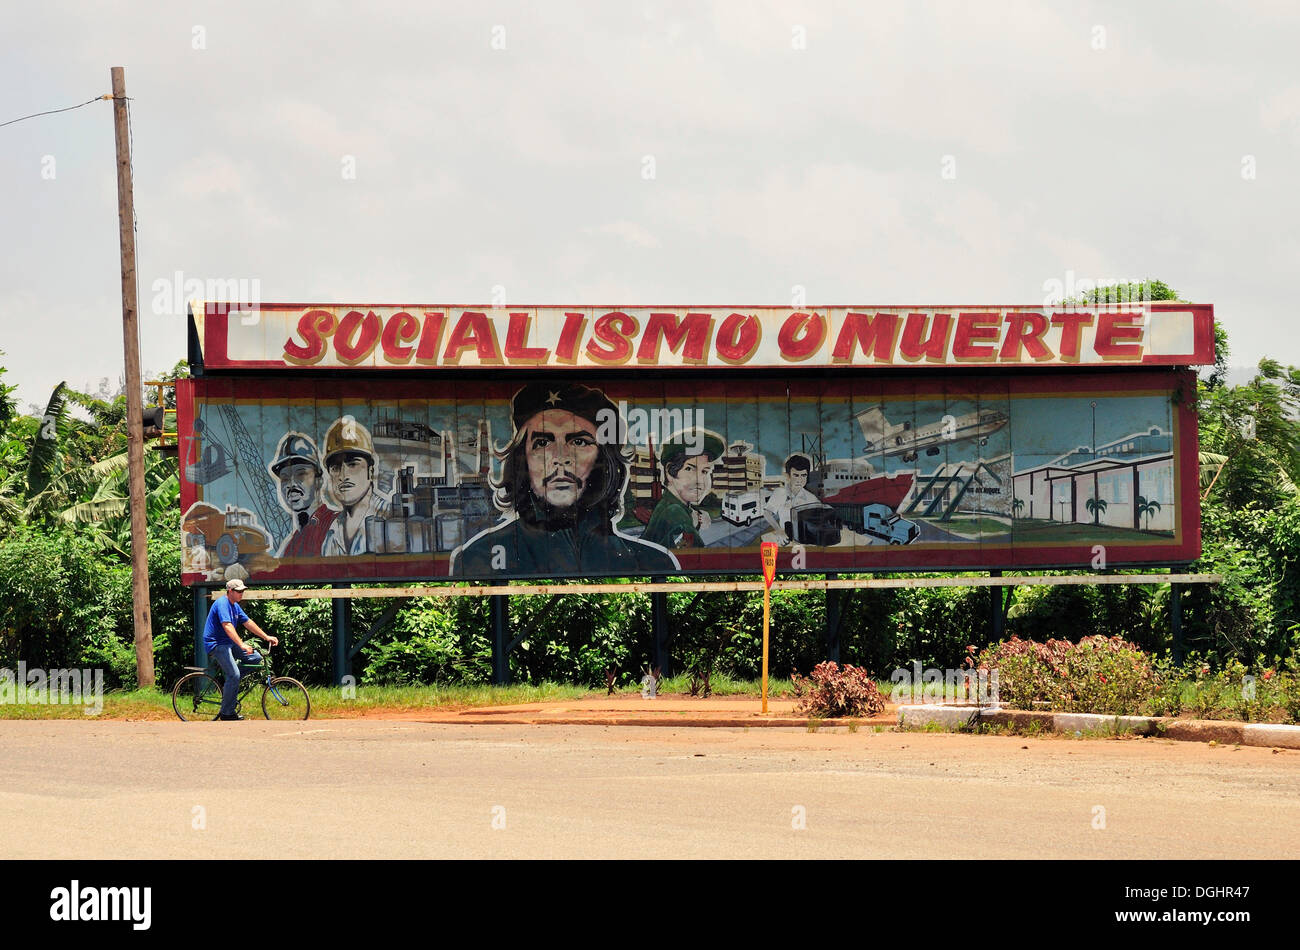 Socialist propaganda Socialismo o muerte, socialism or death, in Moa, Cuba, Caribbean Stock Photo